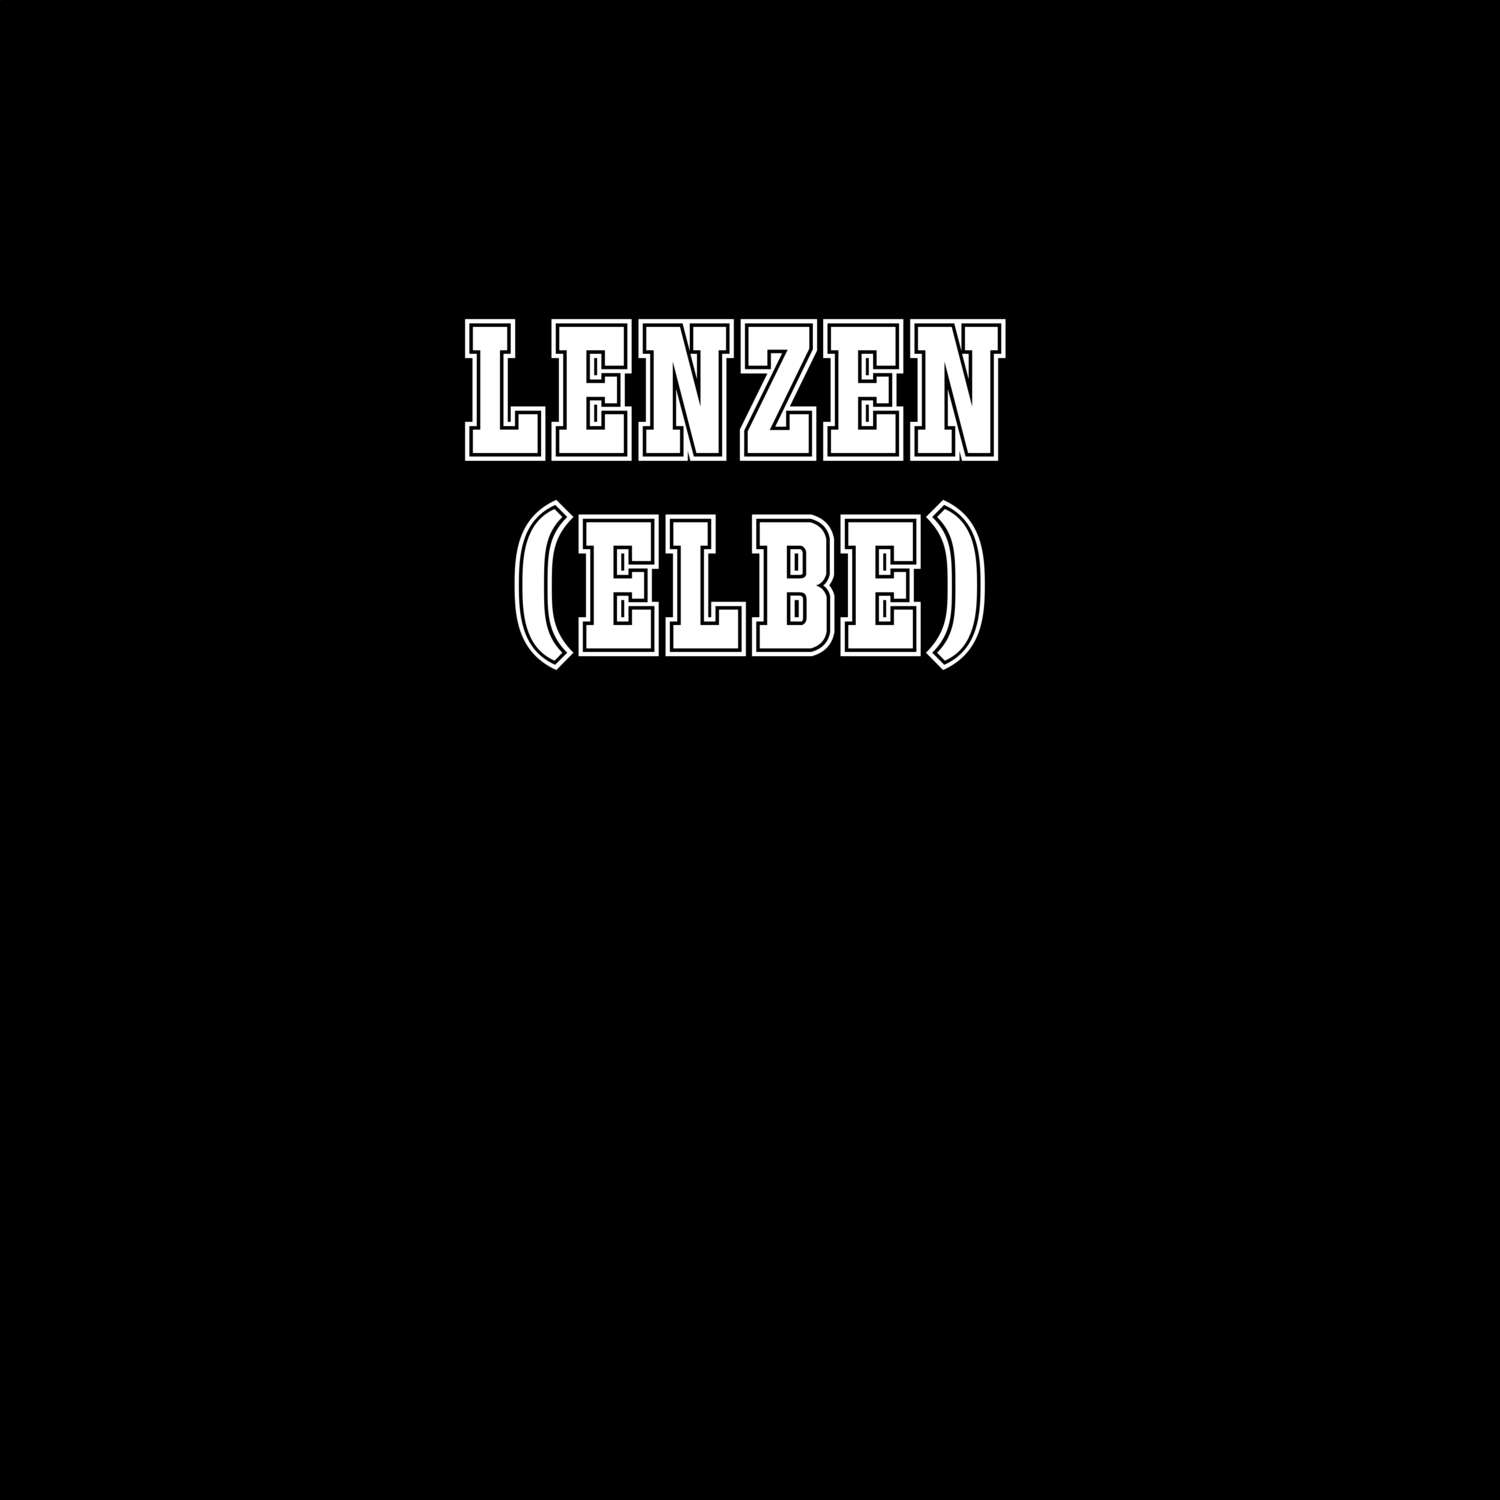 Lenzen (Elbe) T-Shirt »Classic«